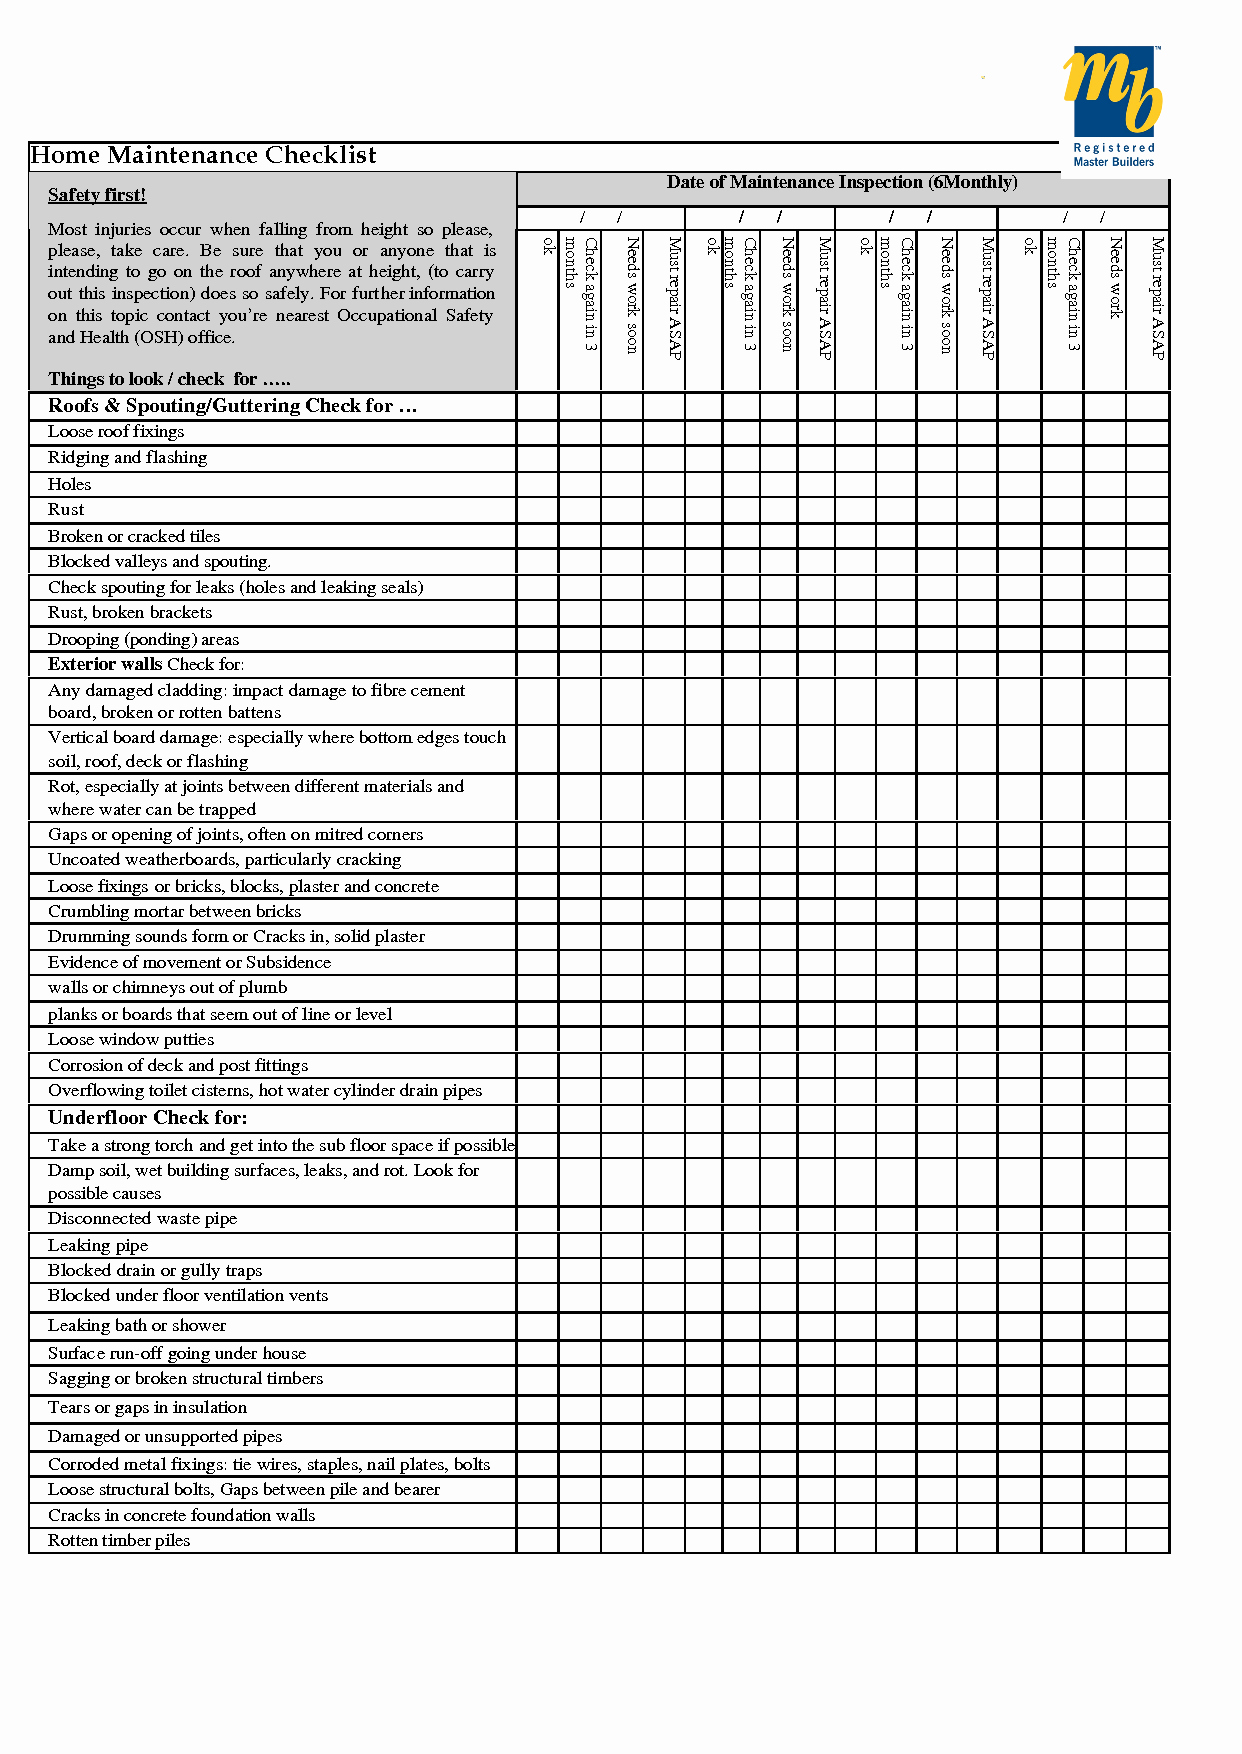 Home Maintenance Checklist Printable Beautiful Home Maintenance Checklist Printable